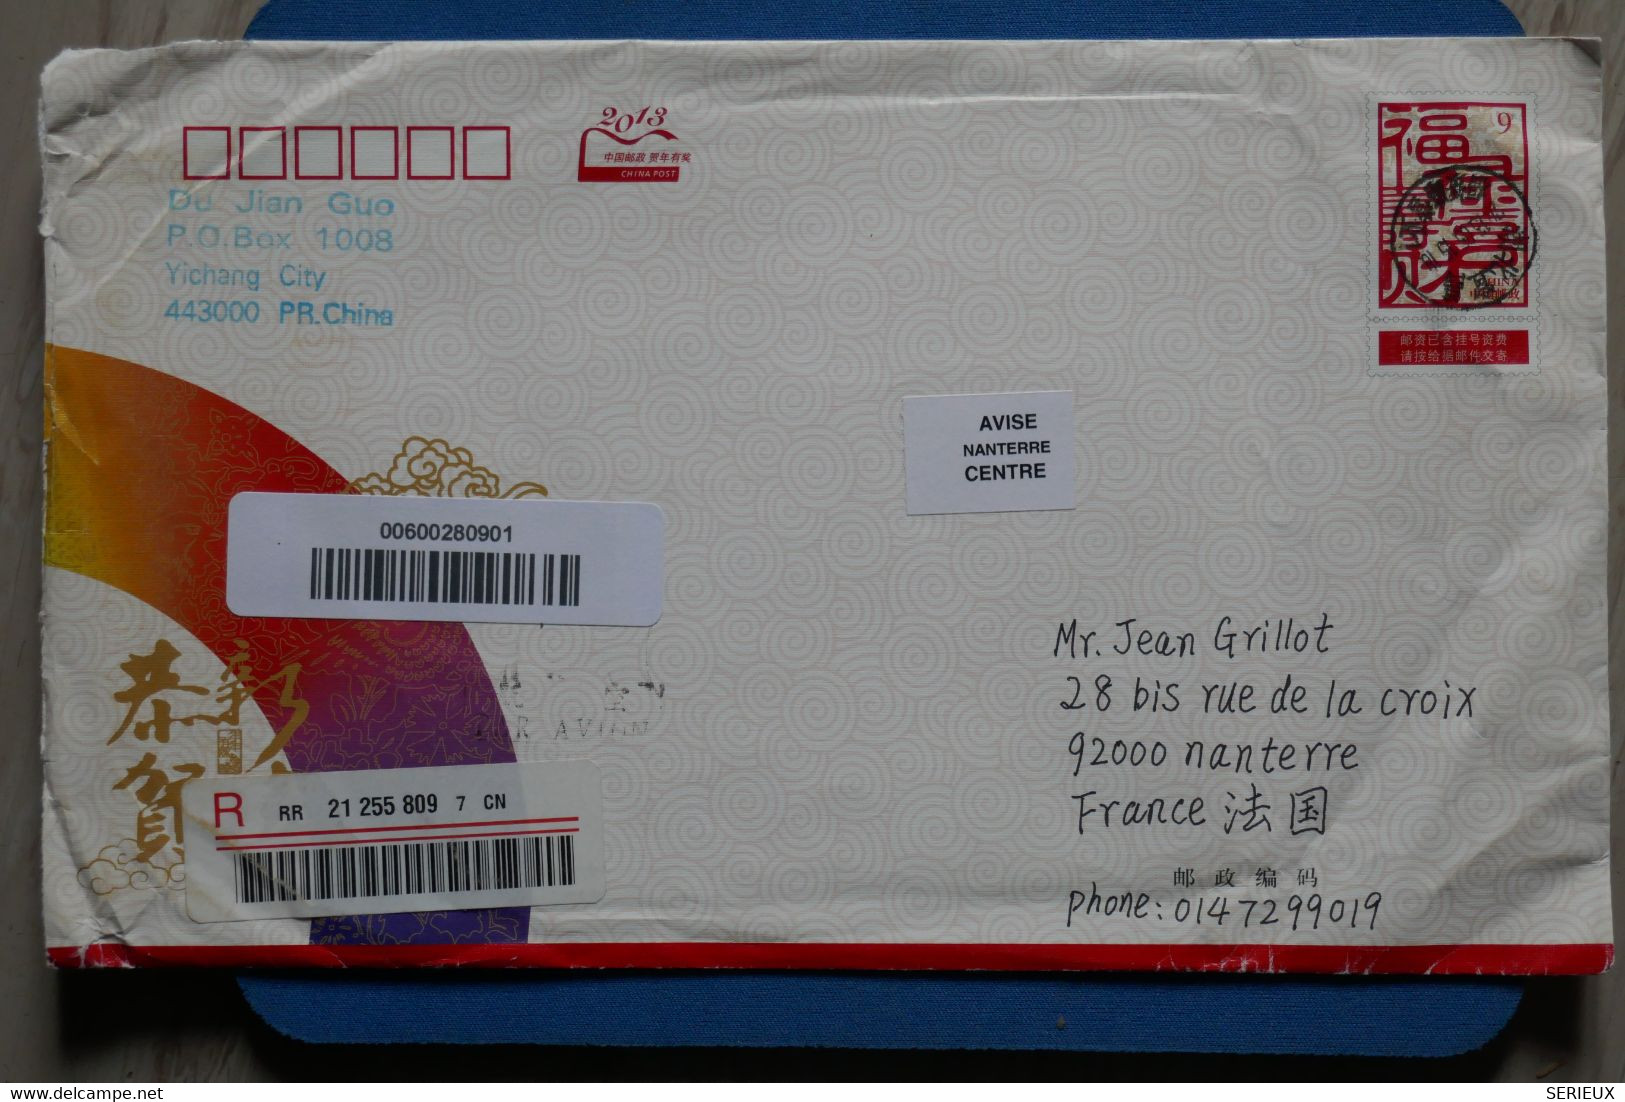 V22   CHINA BELLE  LETTRE RECOM.  2005  YICHANG CHINE POUR NANTERRE PARIS FRANCE  + AFFRANCH. INTERESSANT - Covers & Documents